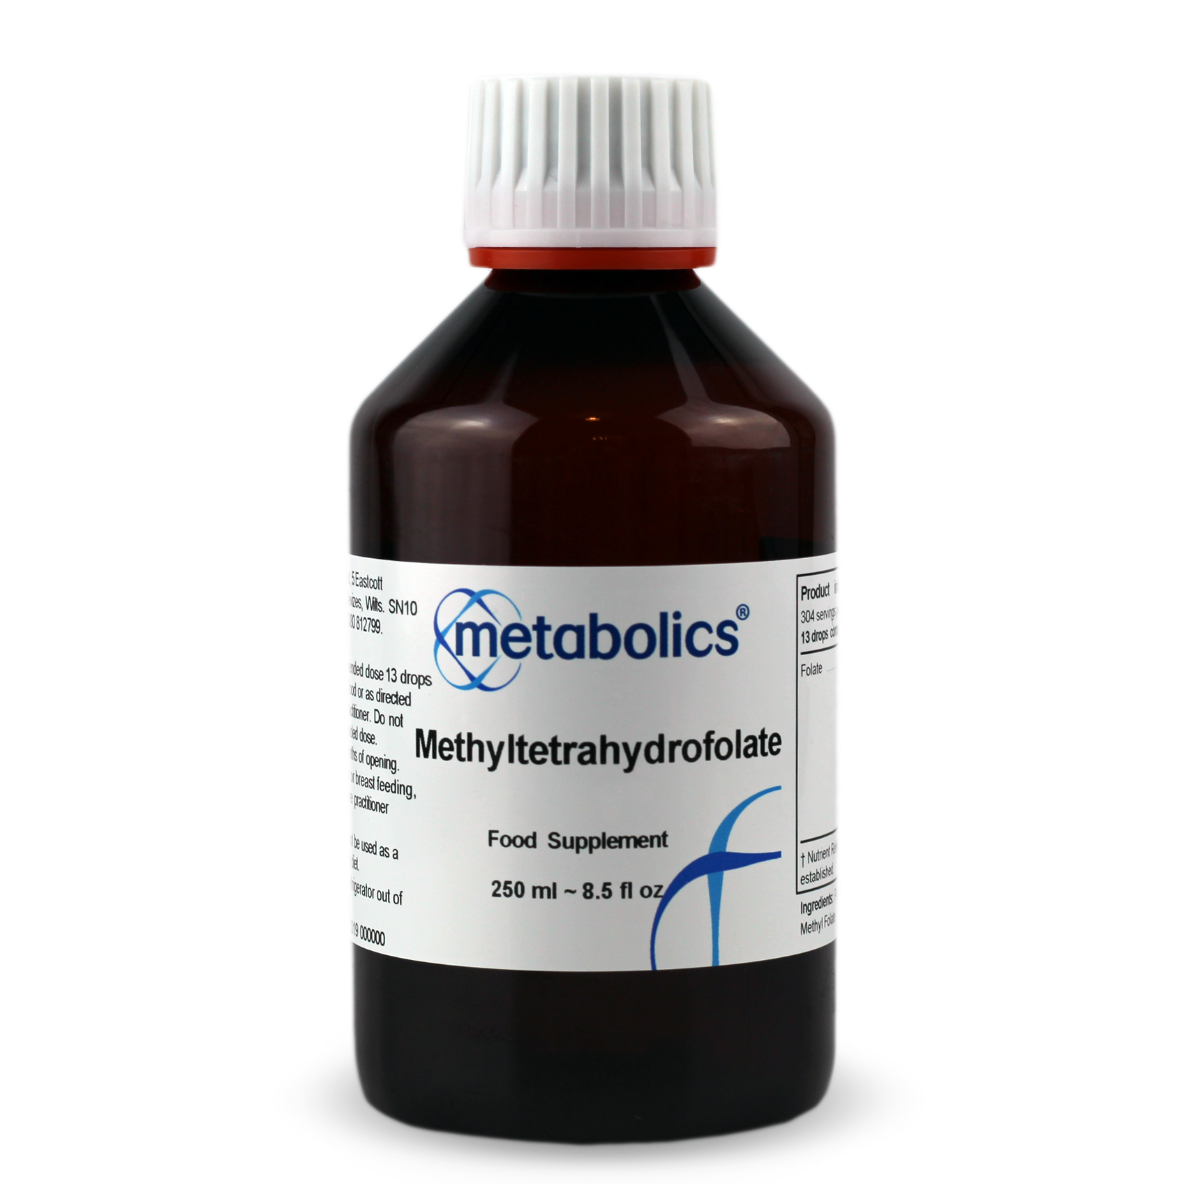 Methyltetrahydrofolate